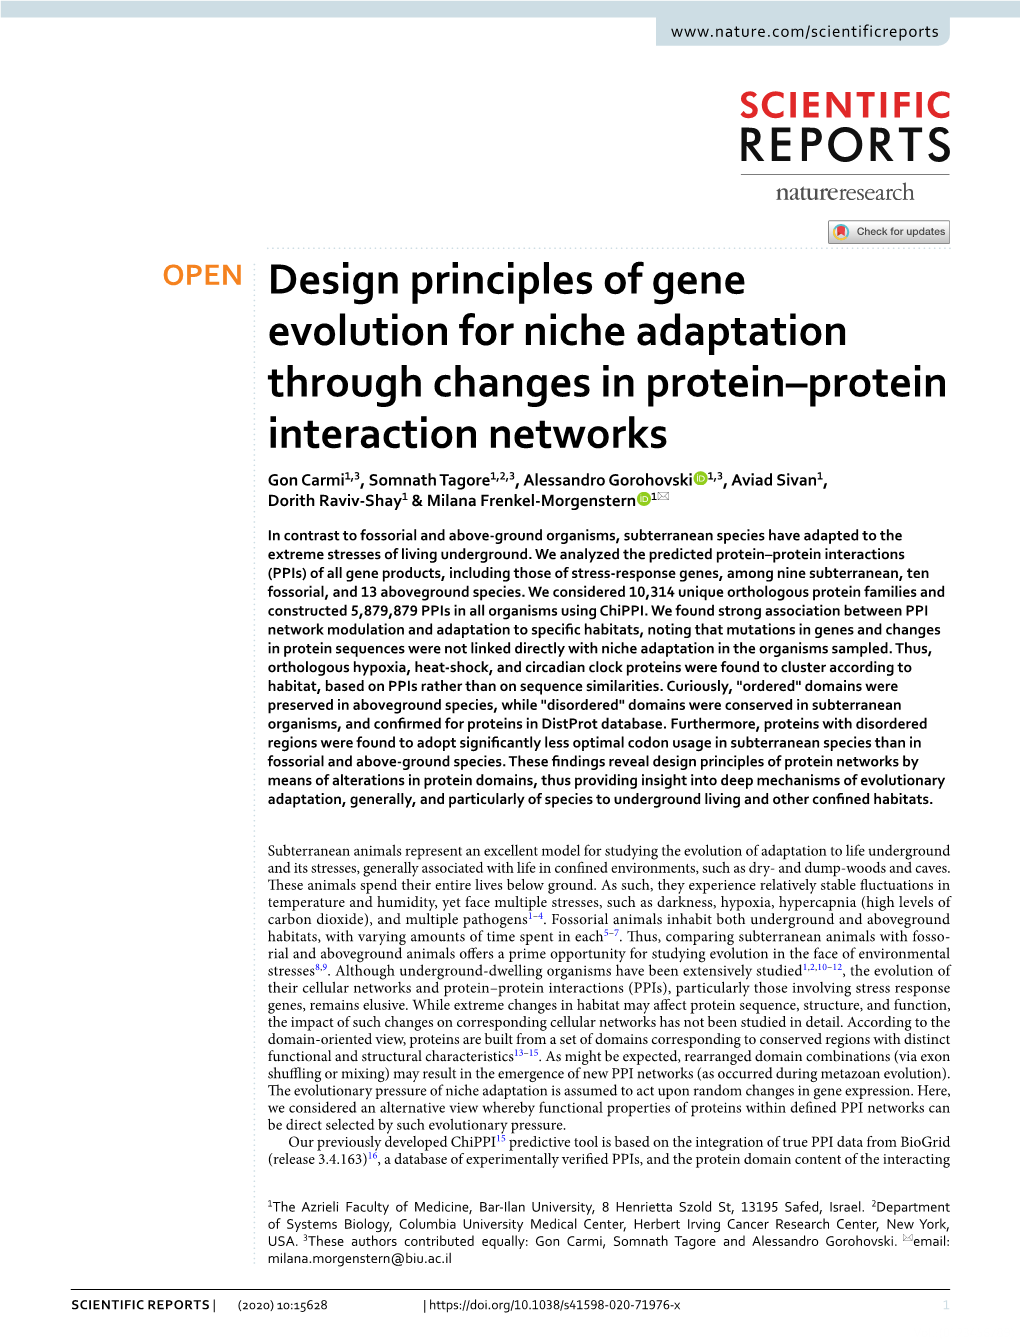 Design Principles of Gene Evolution for Niche Adaptation Through Changes